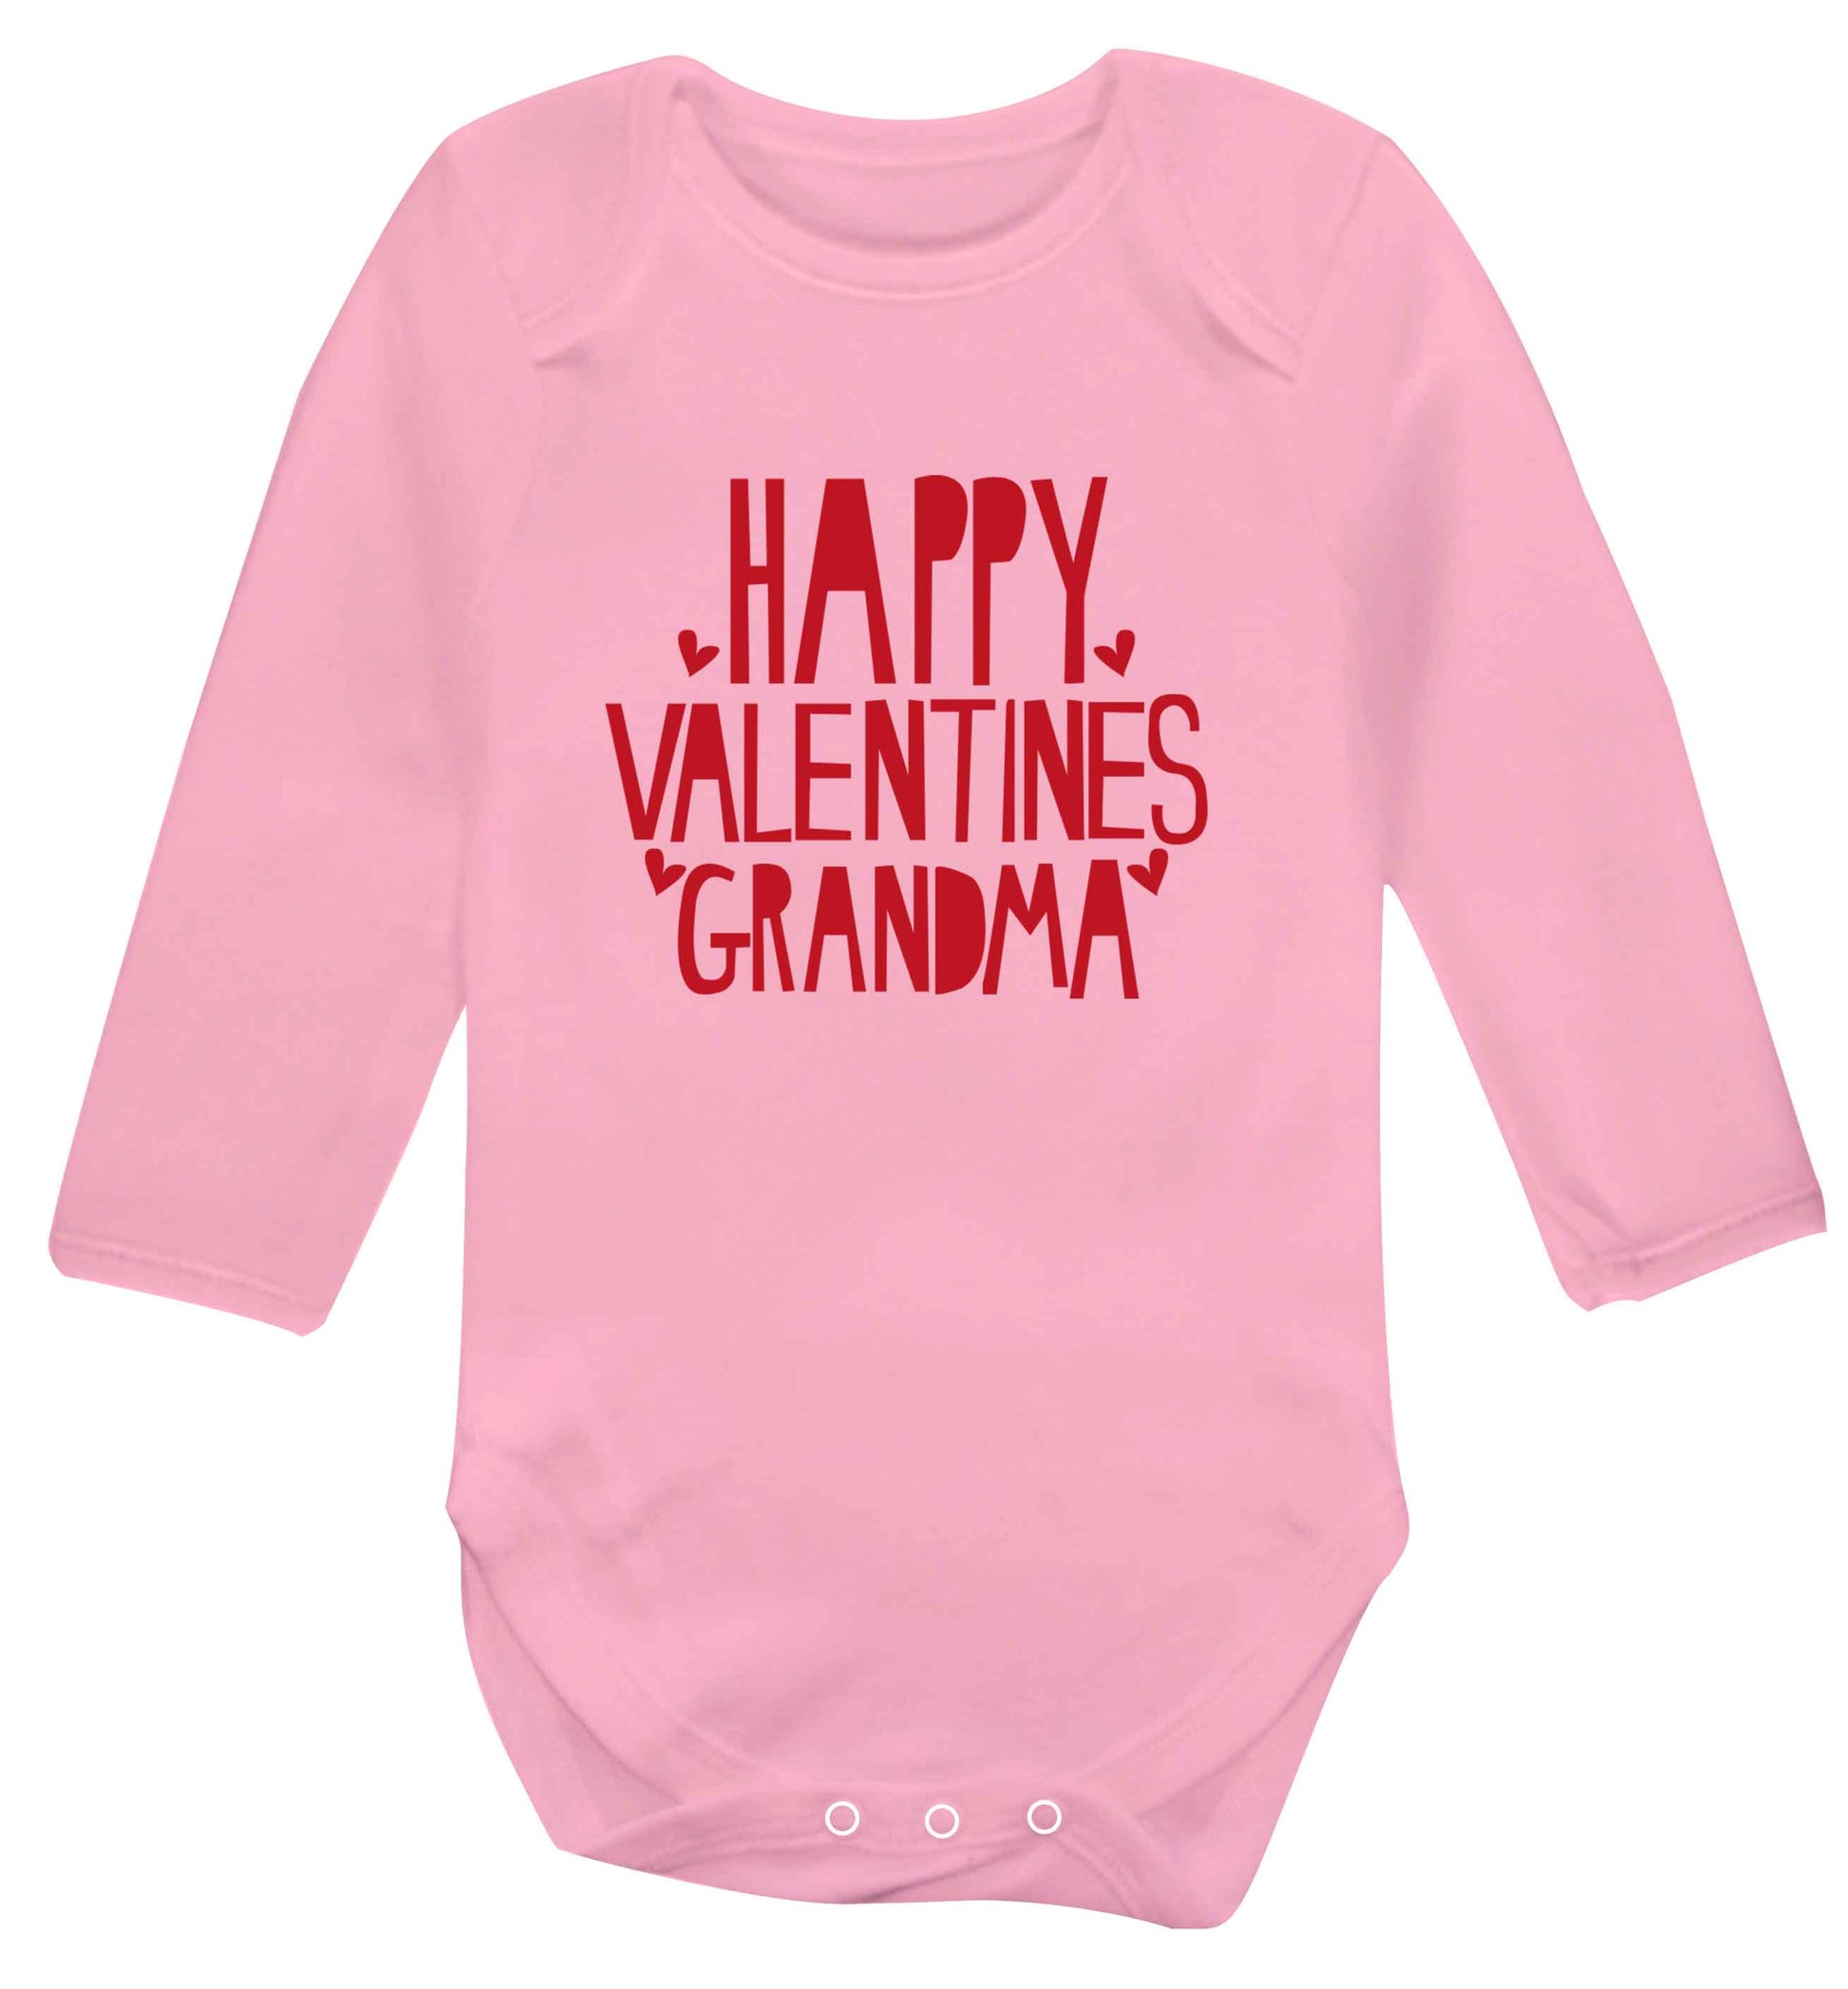 Happy valentines grandma baby vest long sleeved pale pink 6-12 months